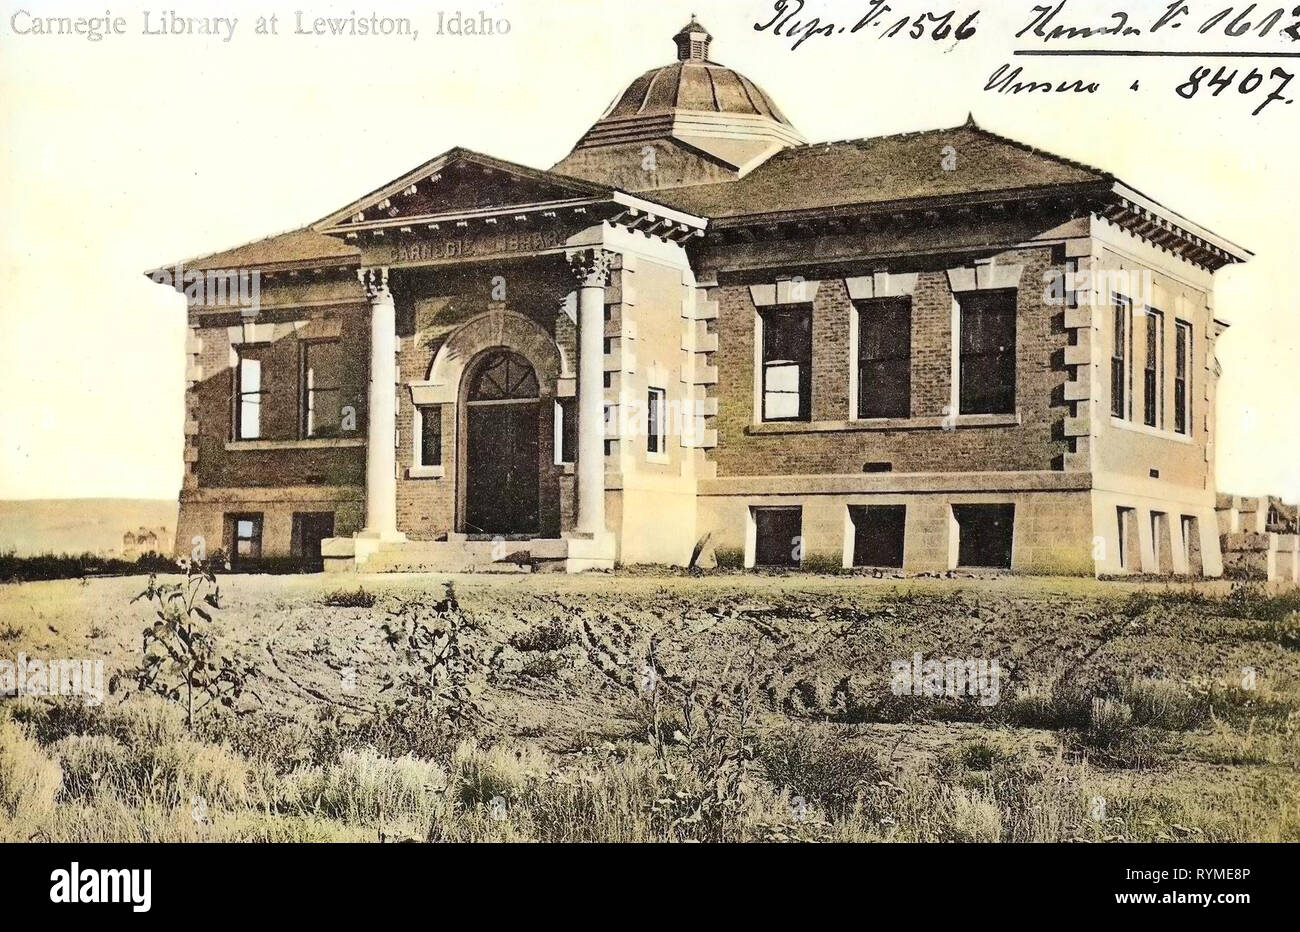 Bibliotecas en Idaho, 1906, Lewiston, la Biblioteca Carnegie en Lewiston Foto de stock